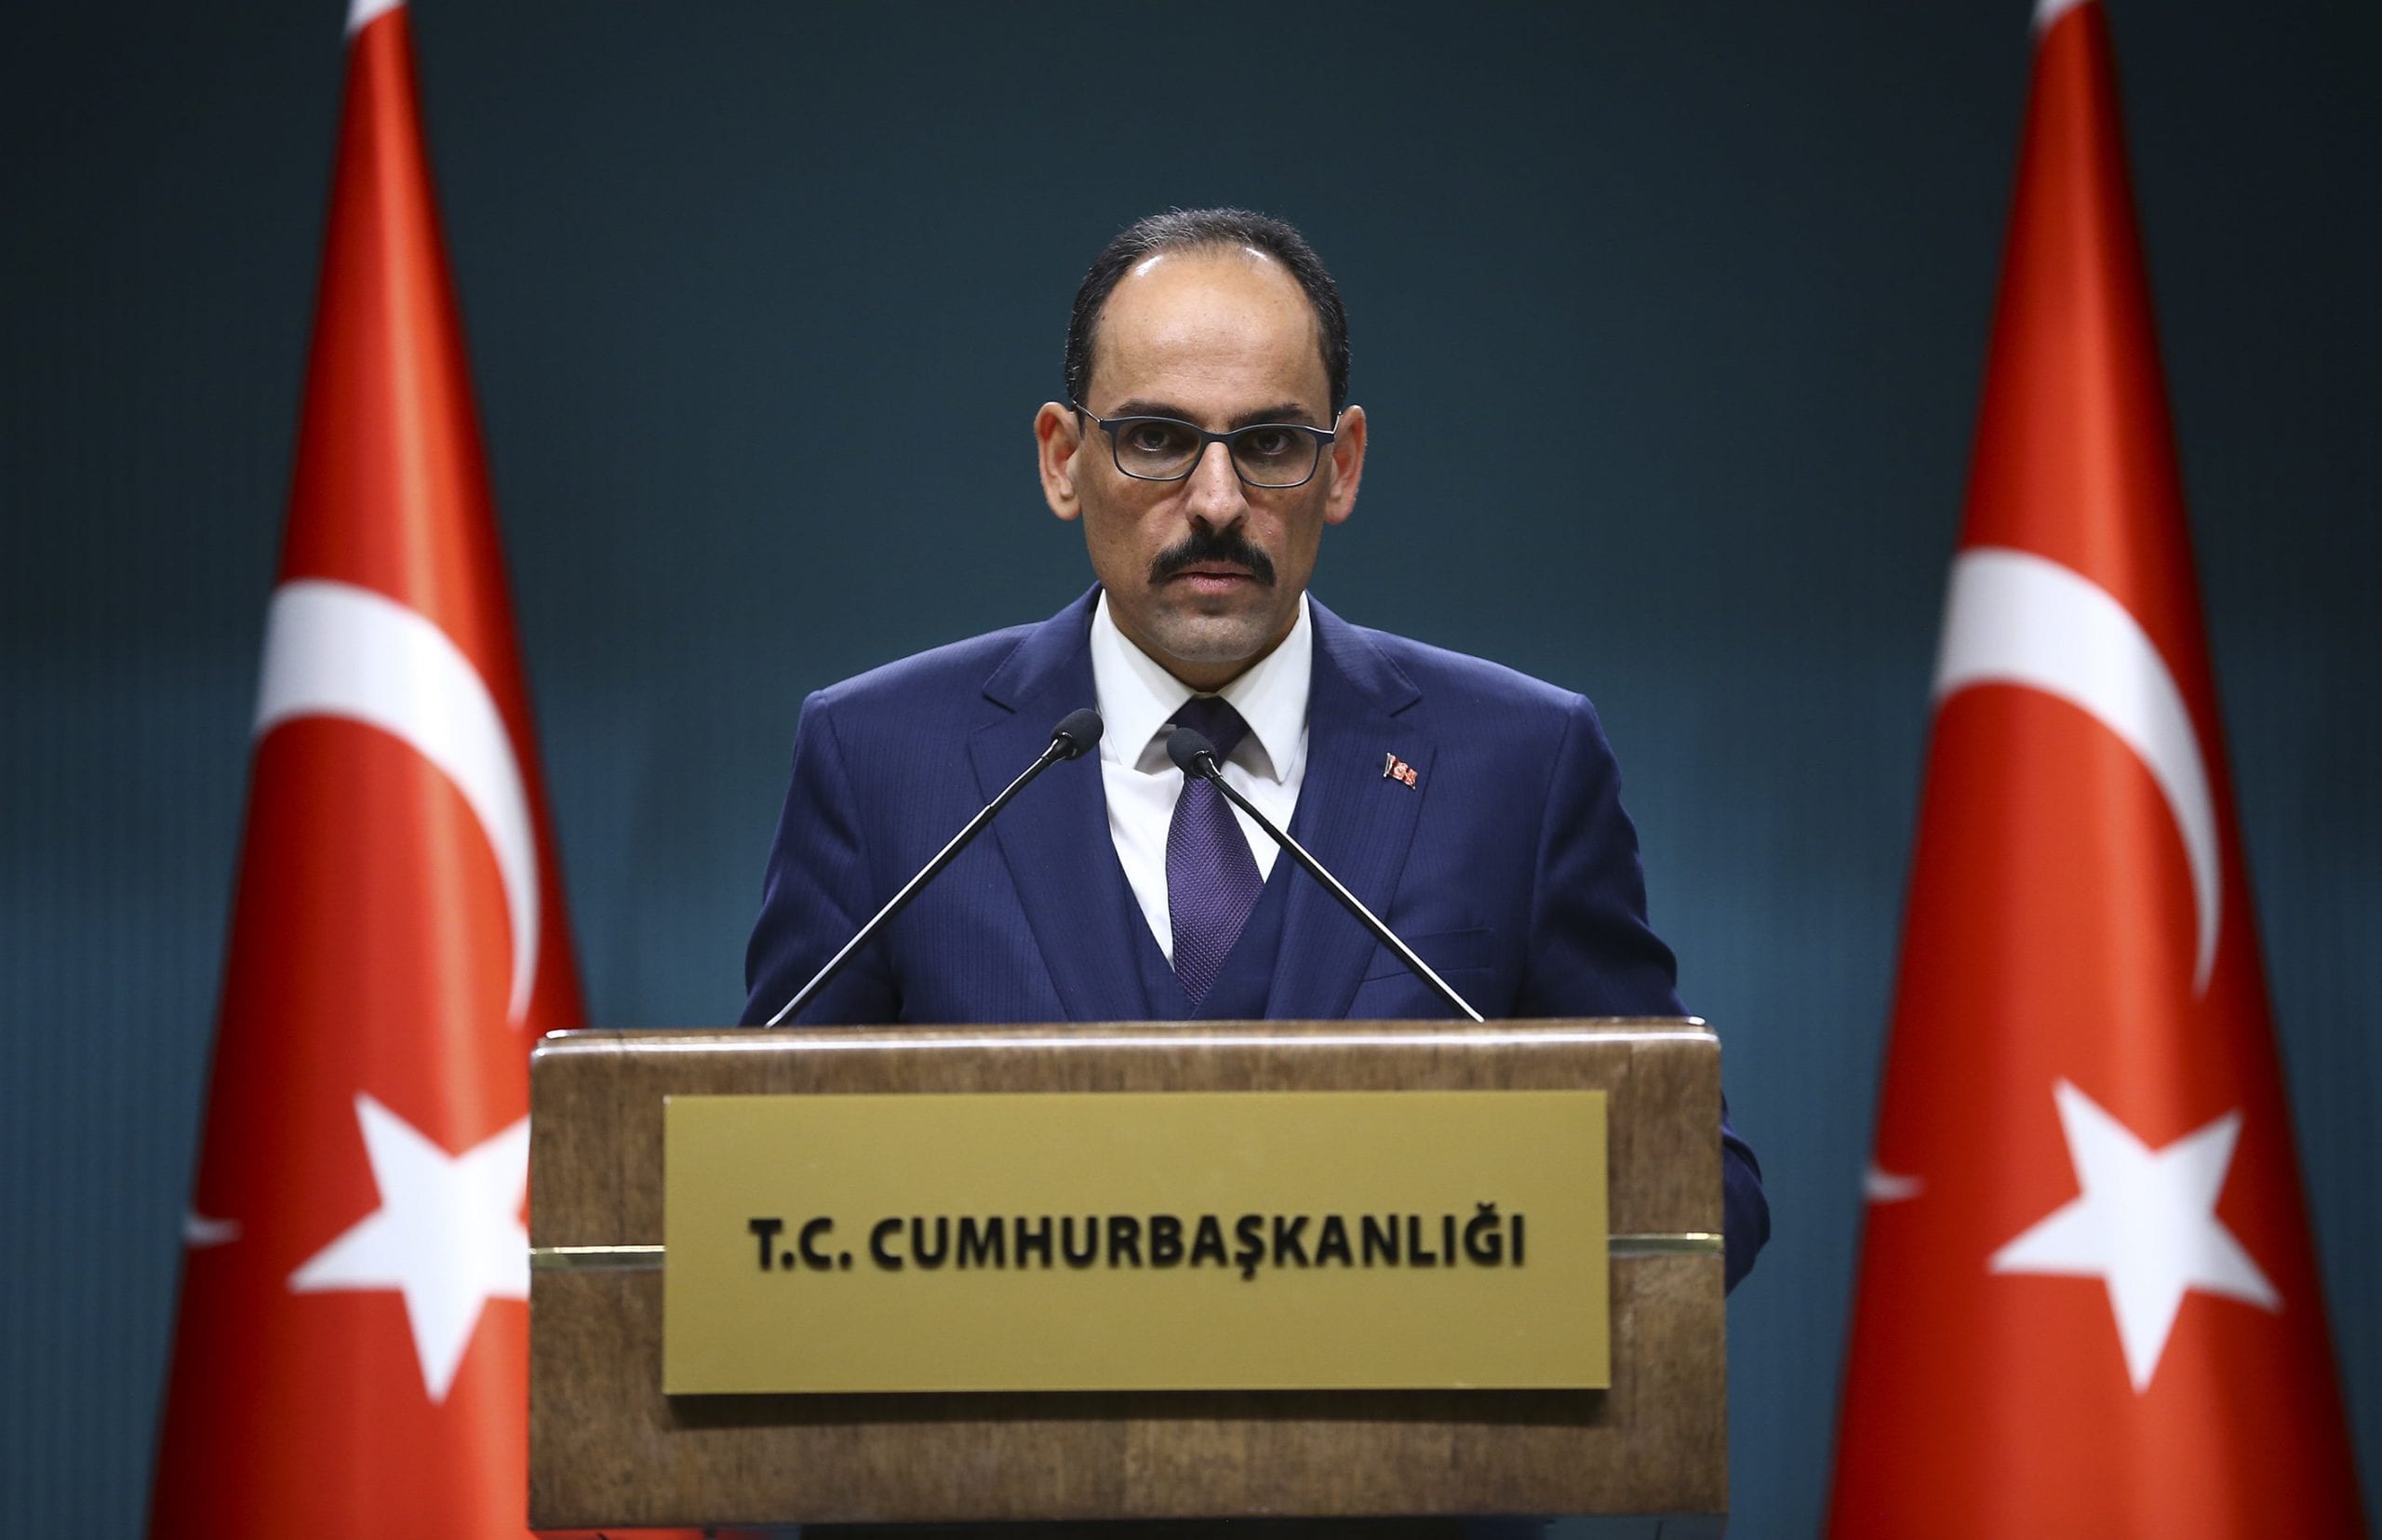 Turkey to send medical aid supplies to Palestine, Kalın says